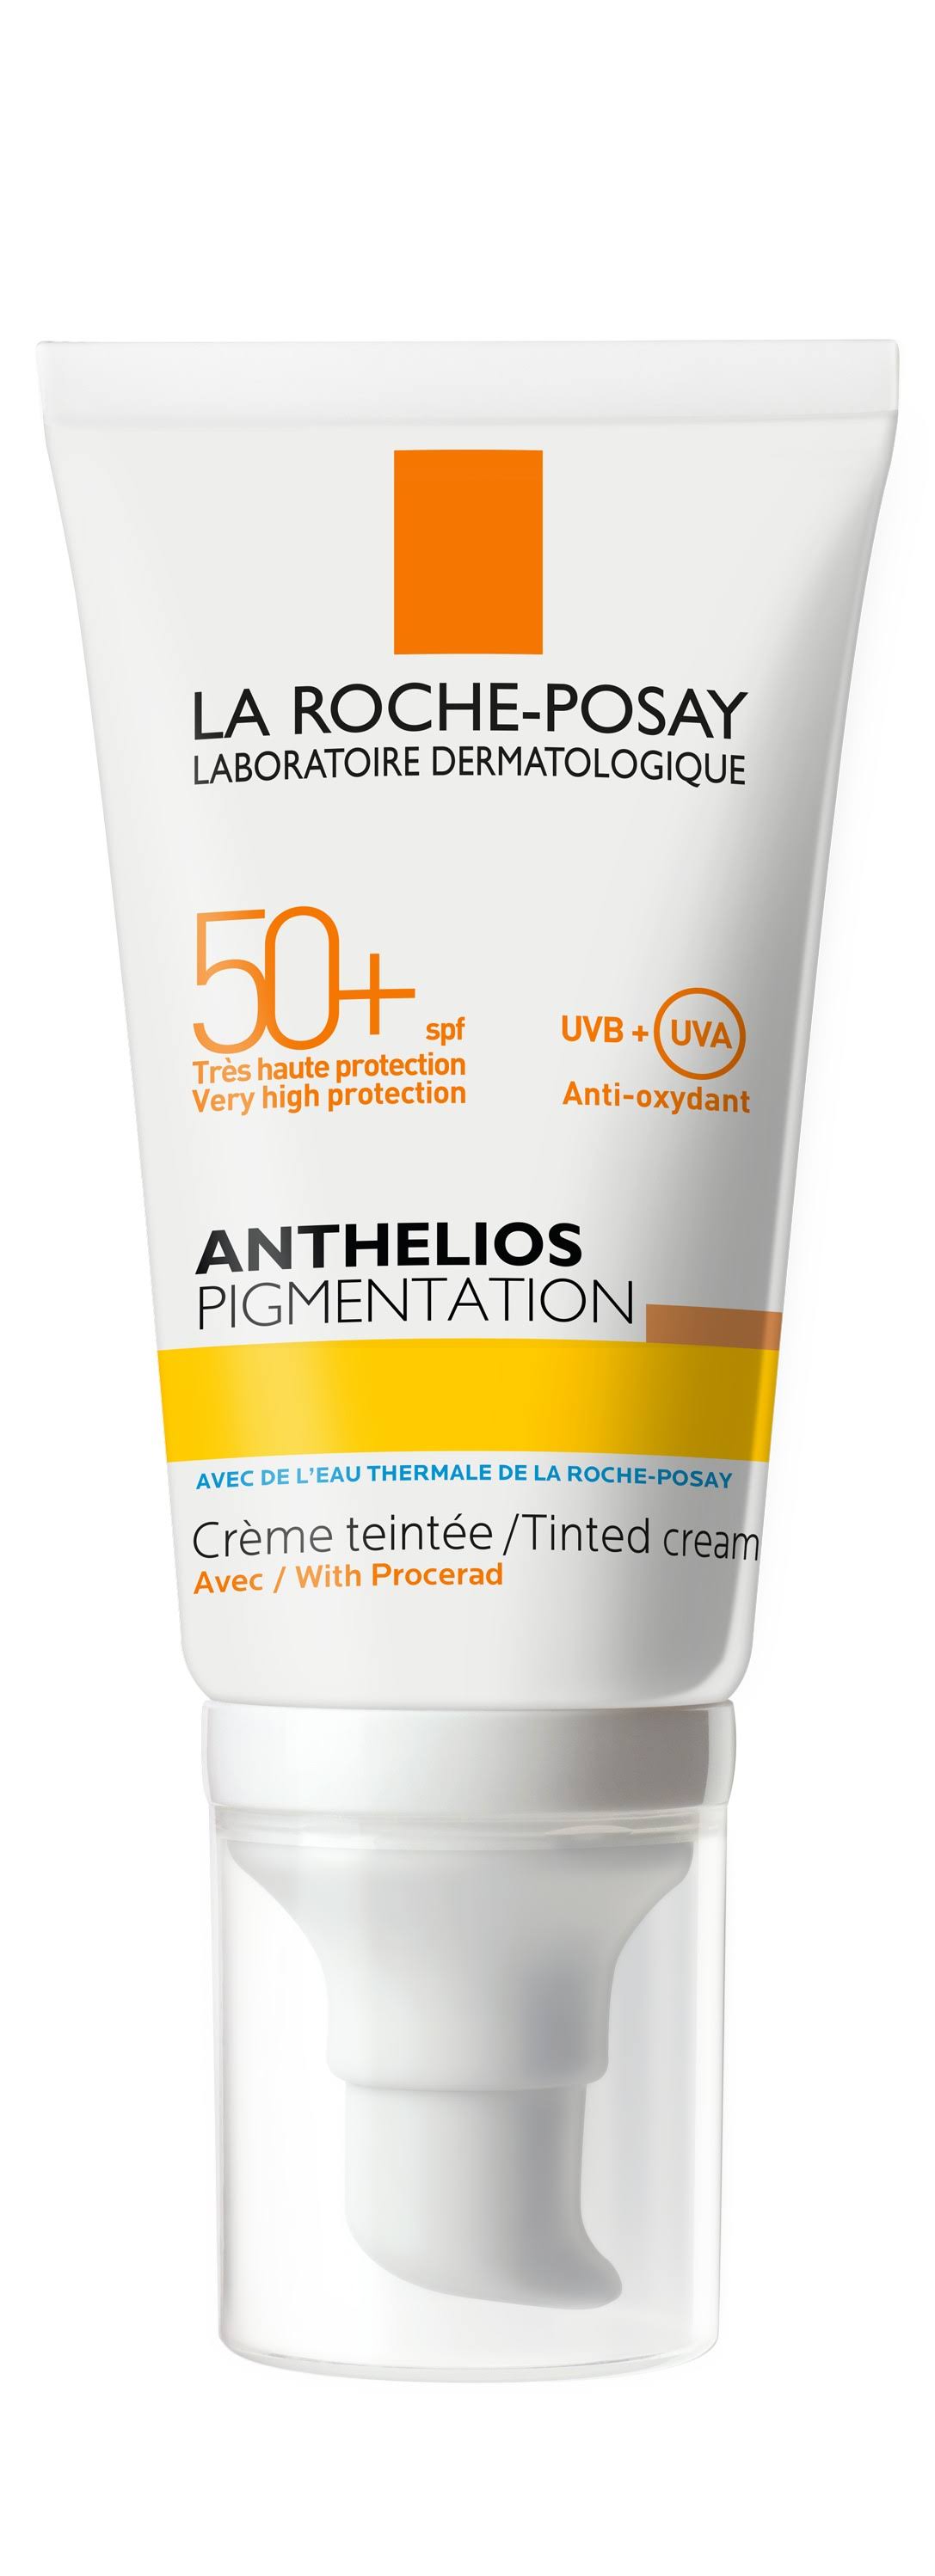 La Roche Posay Anthelios Pigmentation Tinted Cream - Spf50, 50ml